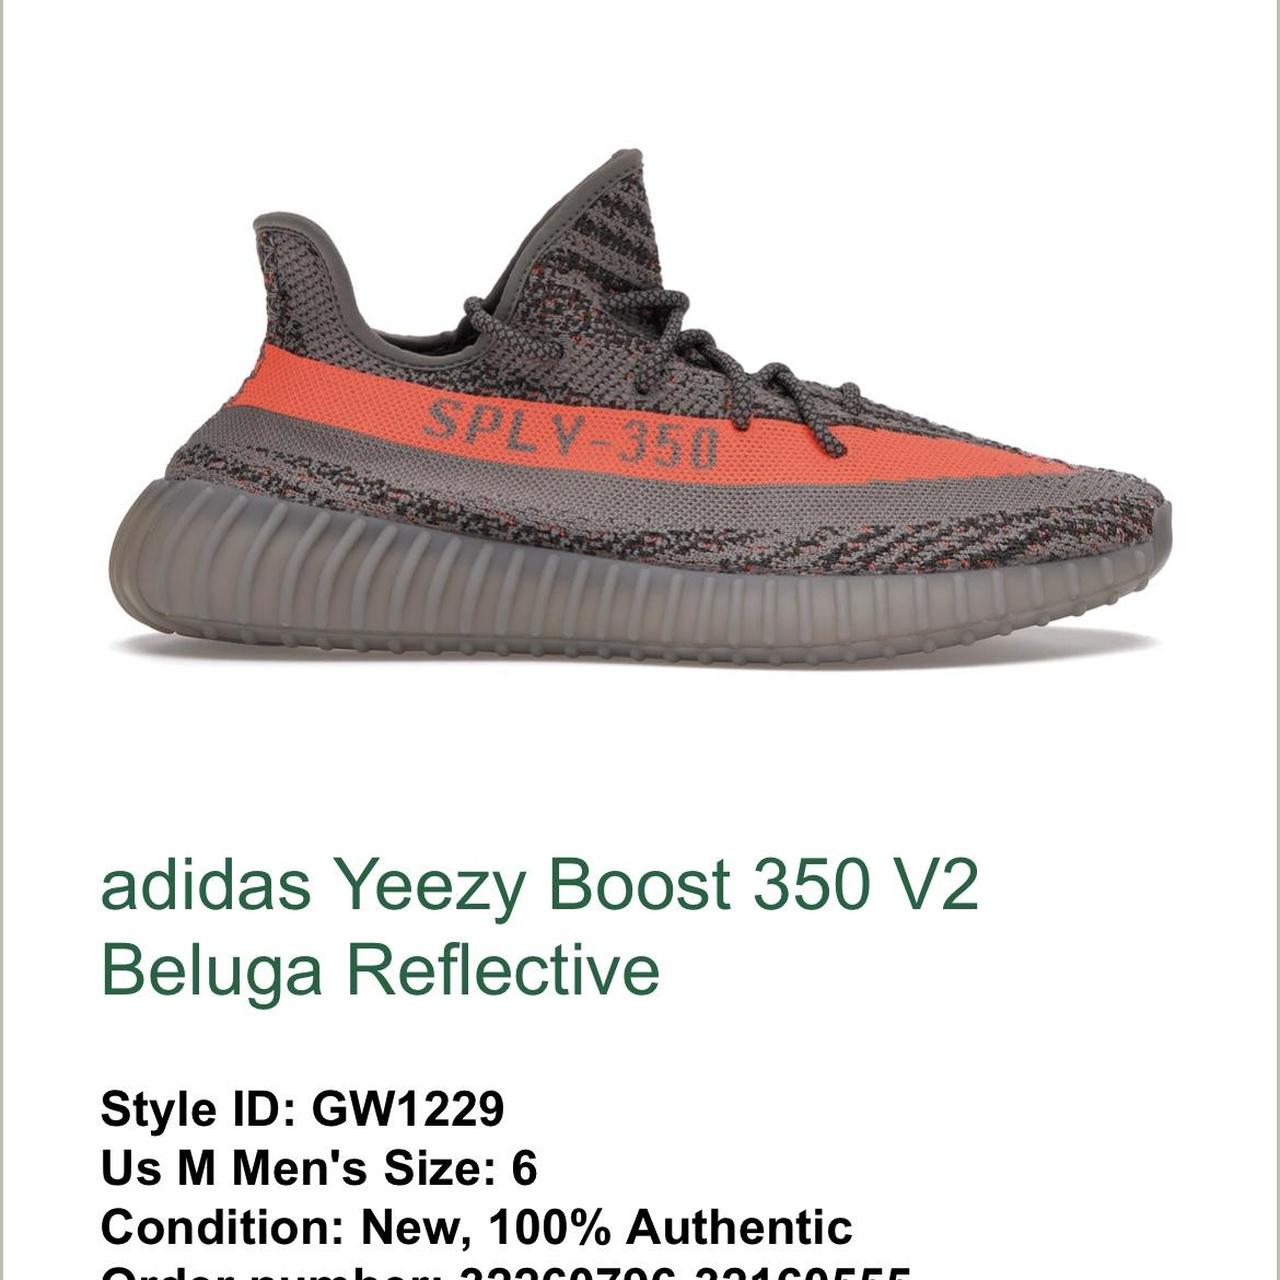 adidas Yeezy Boost 350 V2 Beluga Reflective Men's - GW1229 - US